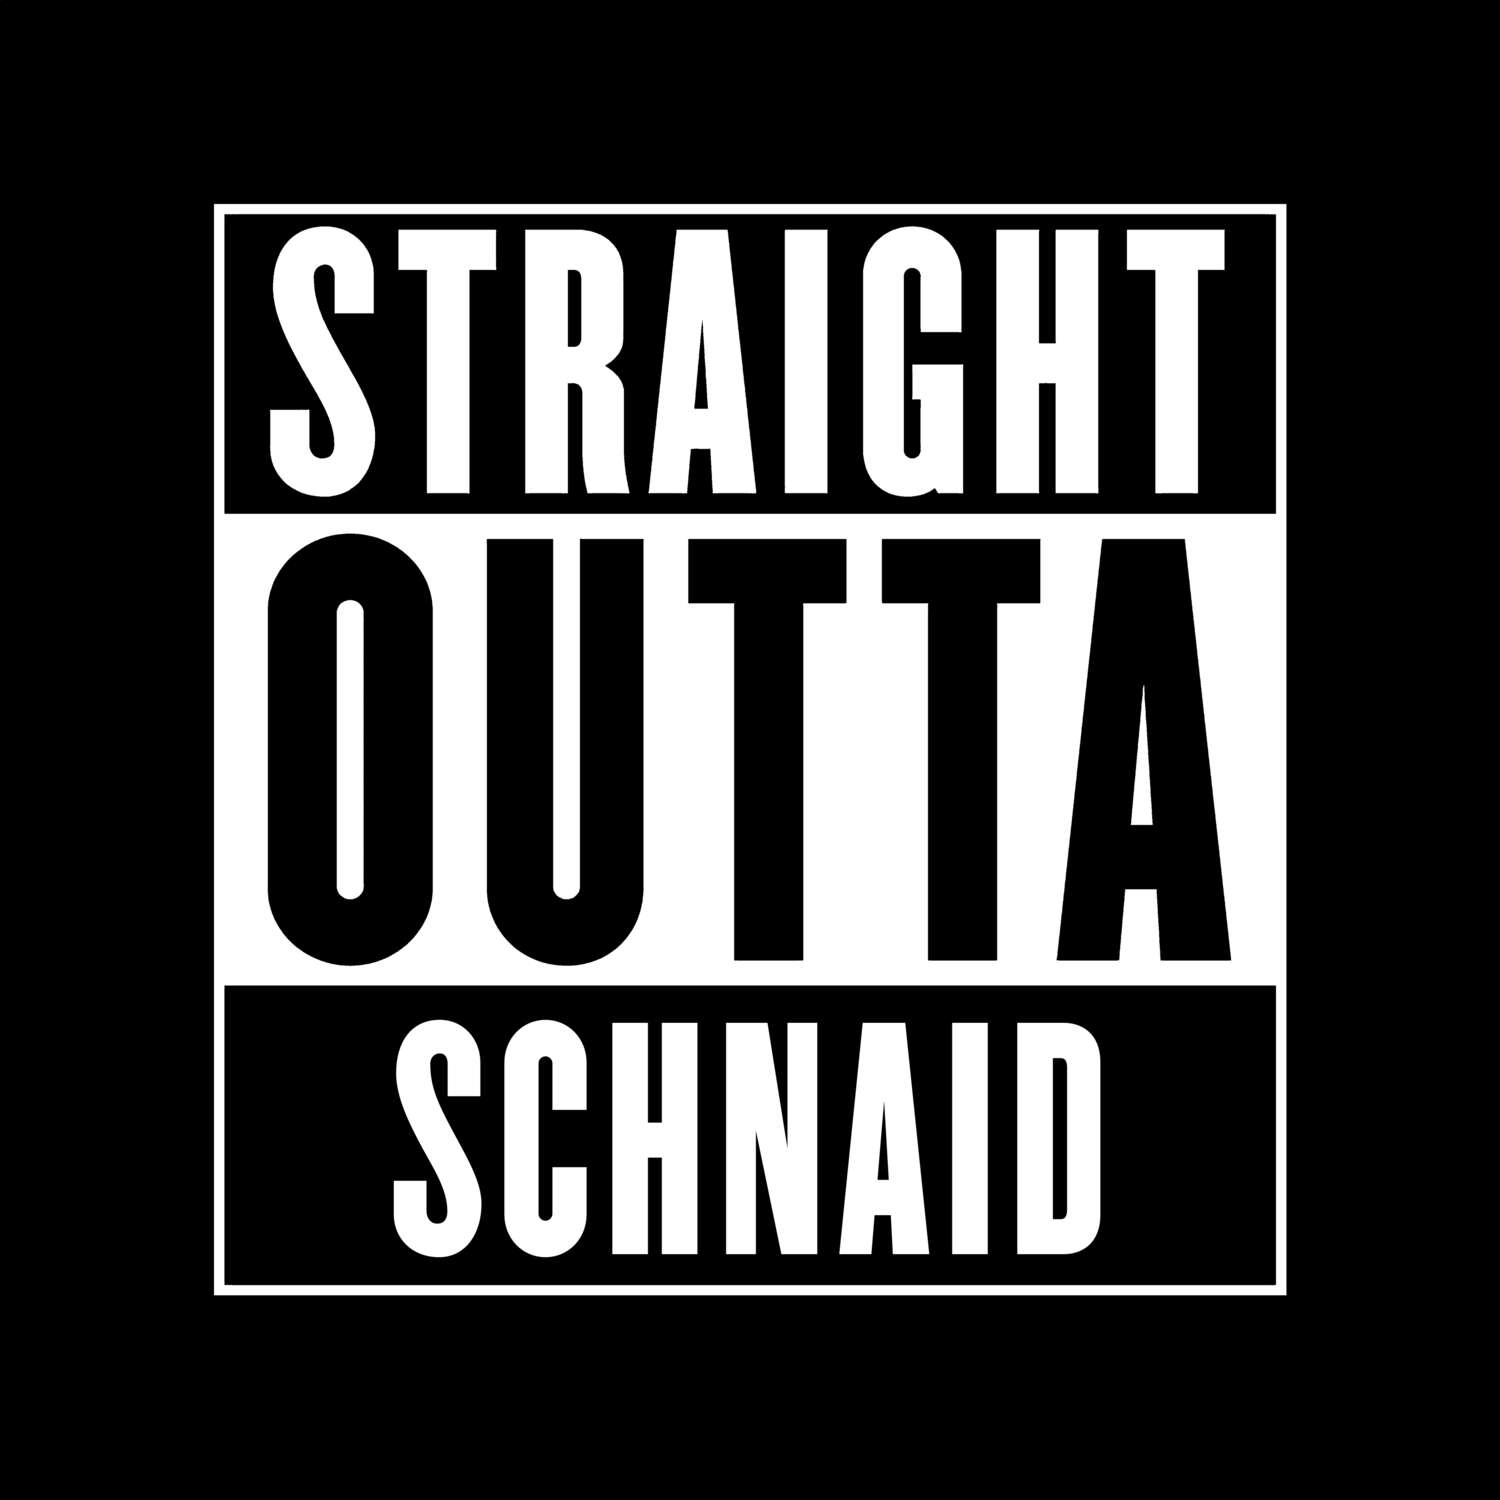 Schnaid T-Shirt »Straight Outta«